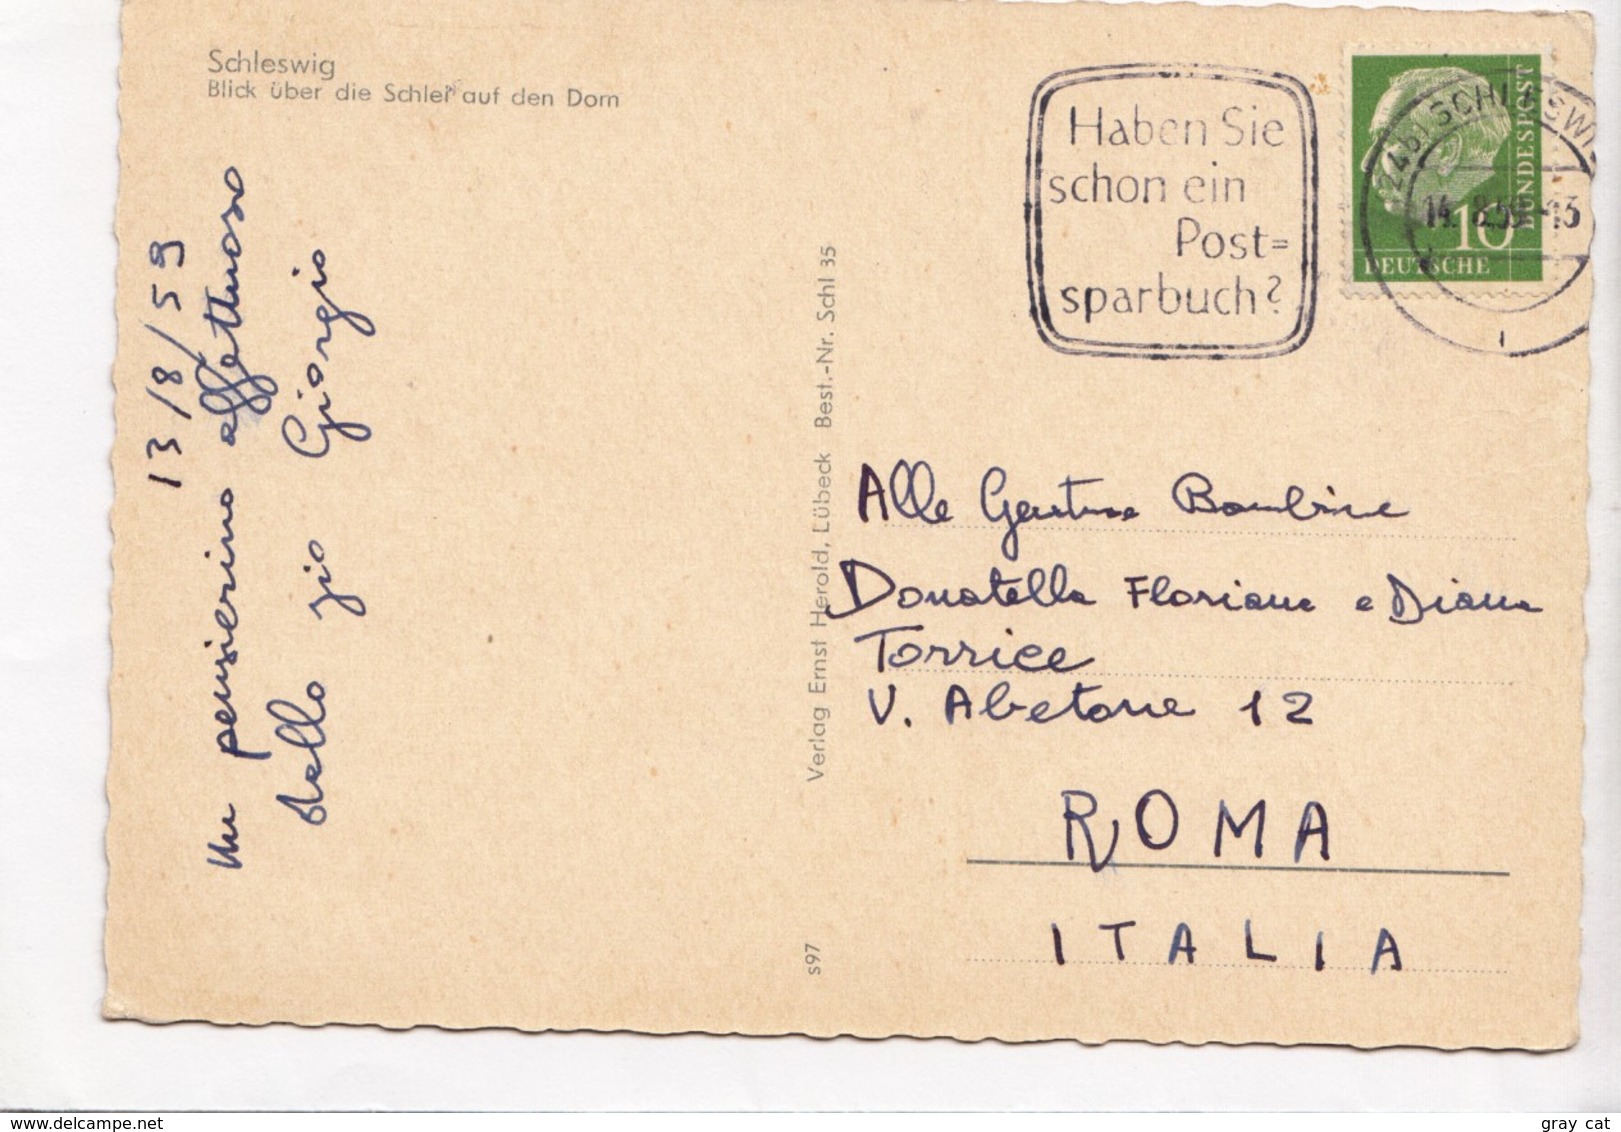 Schleswig, Blick Uber Die Schlel Auf Den Dom, 1959 Used Postcard [23844] - Schleswig